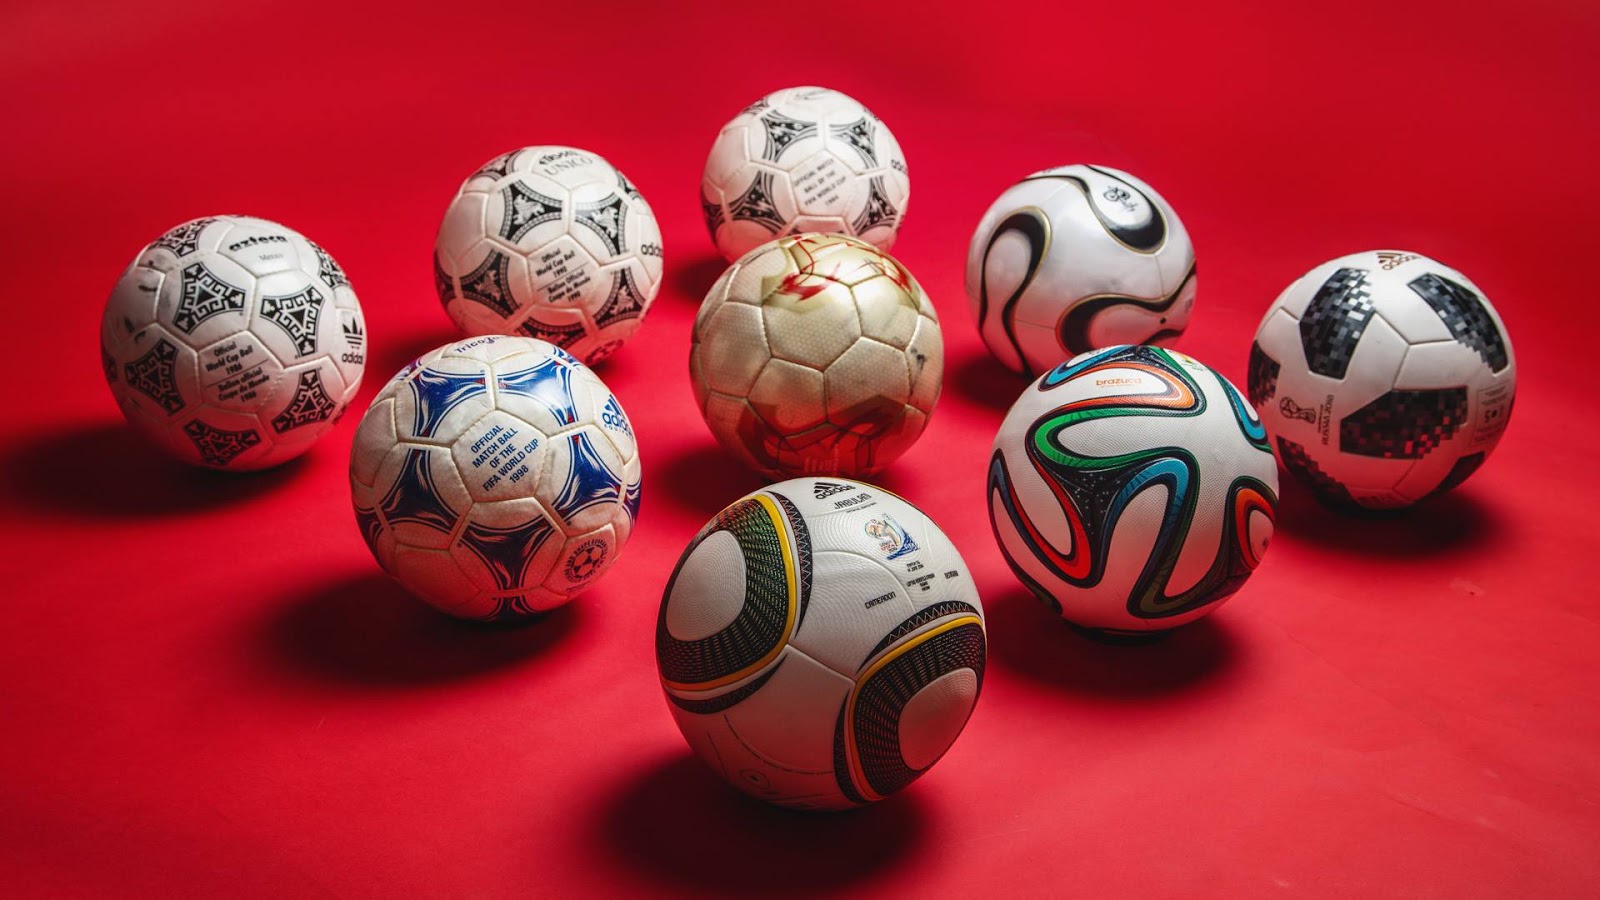 In Detail - Here Are All 13 Adidas World Cup Balls - Tango, Fevernova, Teamgeist Jabulani Footy Headlines